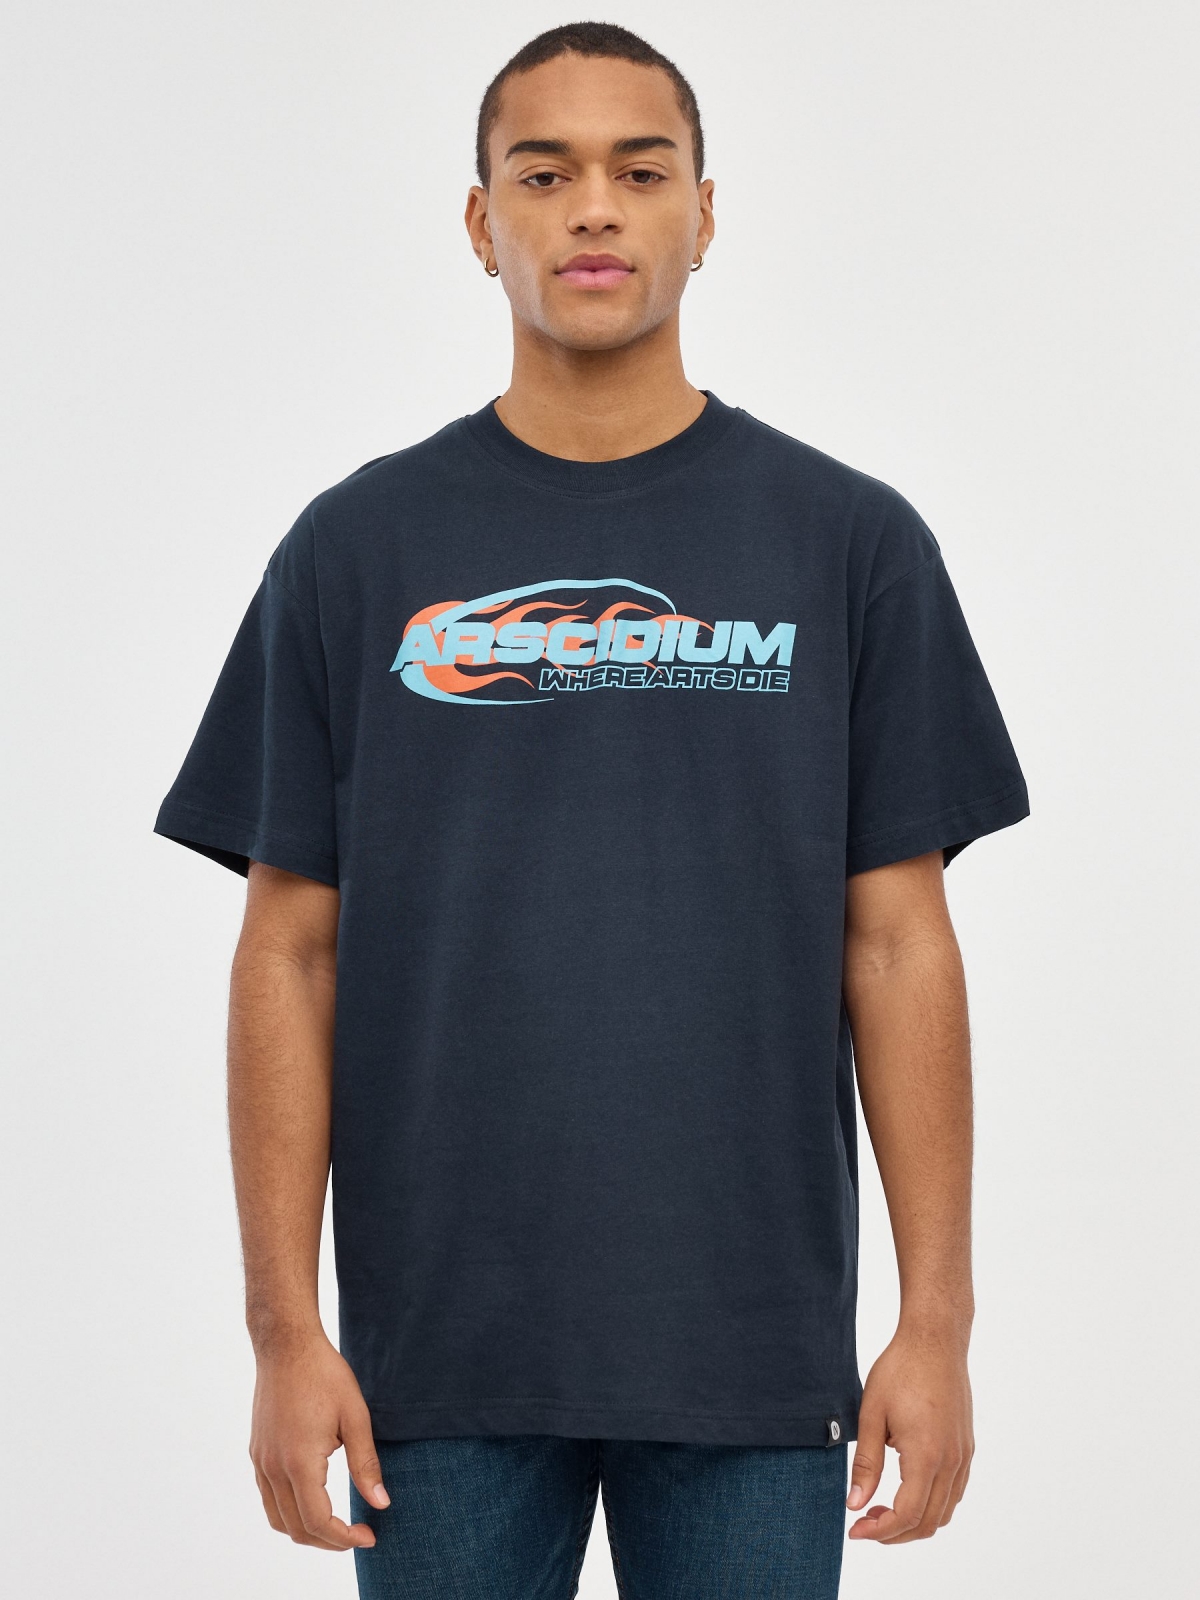 Camiseta Arscidium azul marinho vista meia frontal